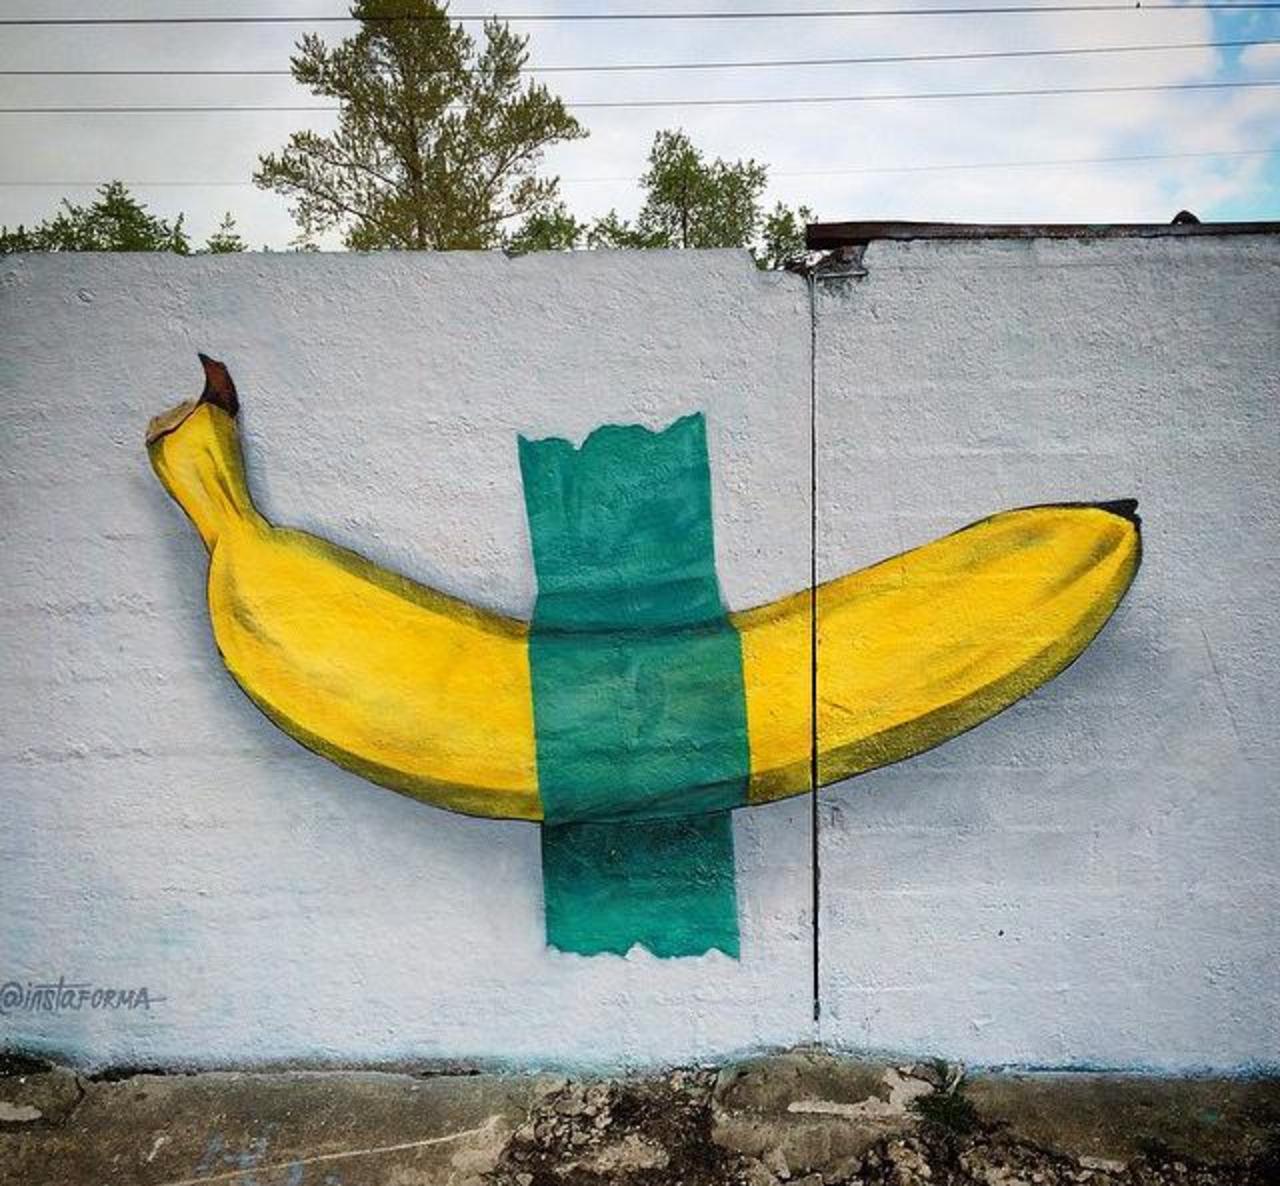 New Street Art by Ches 

#art #arte #graffiti #streetart http://t.co/pWLJxNaZMg